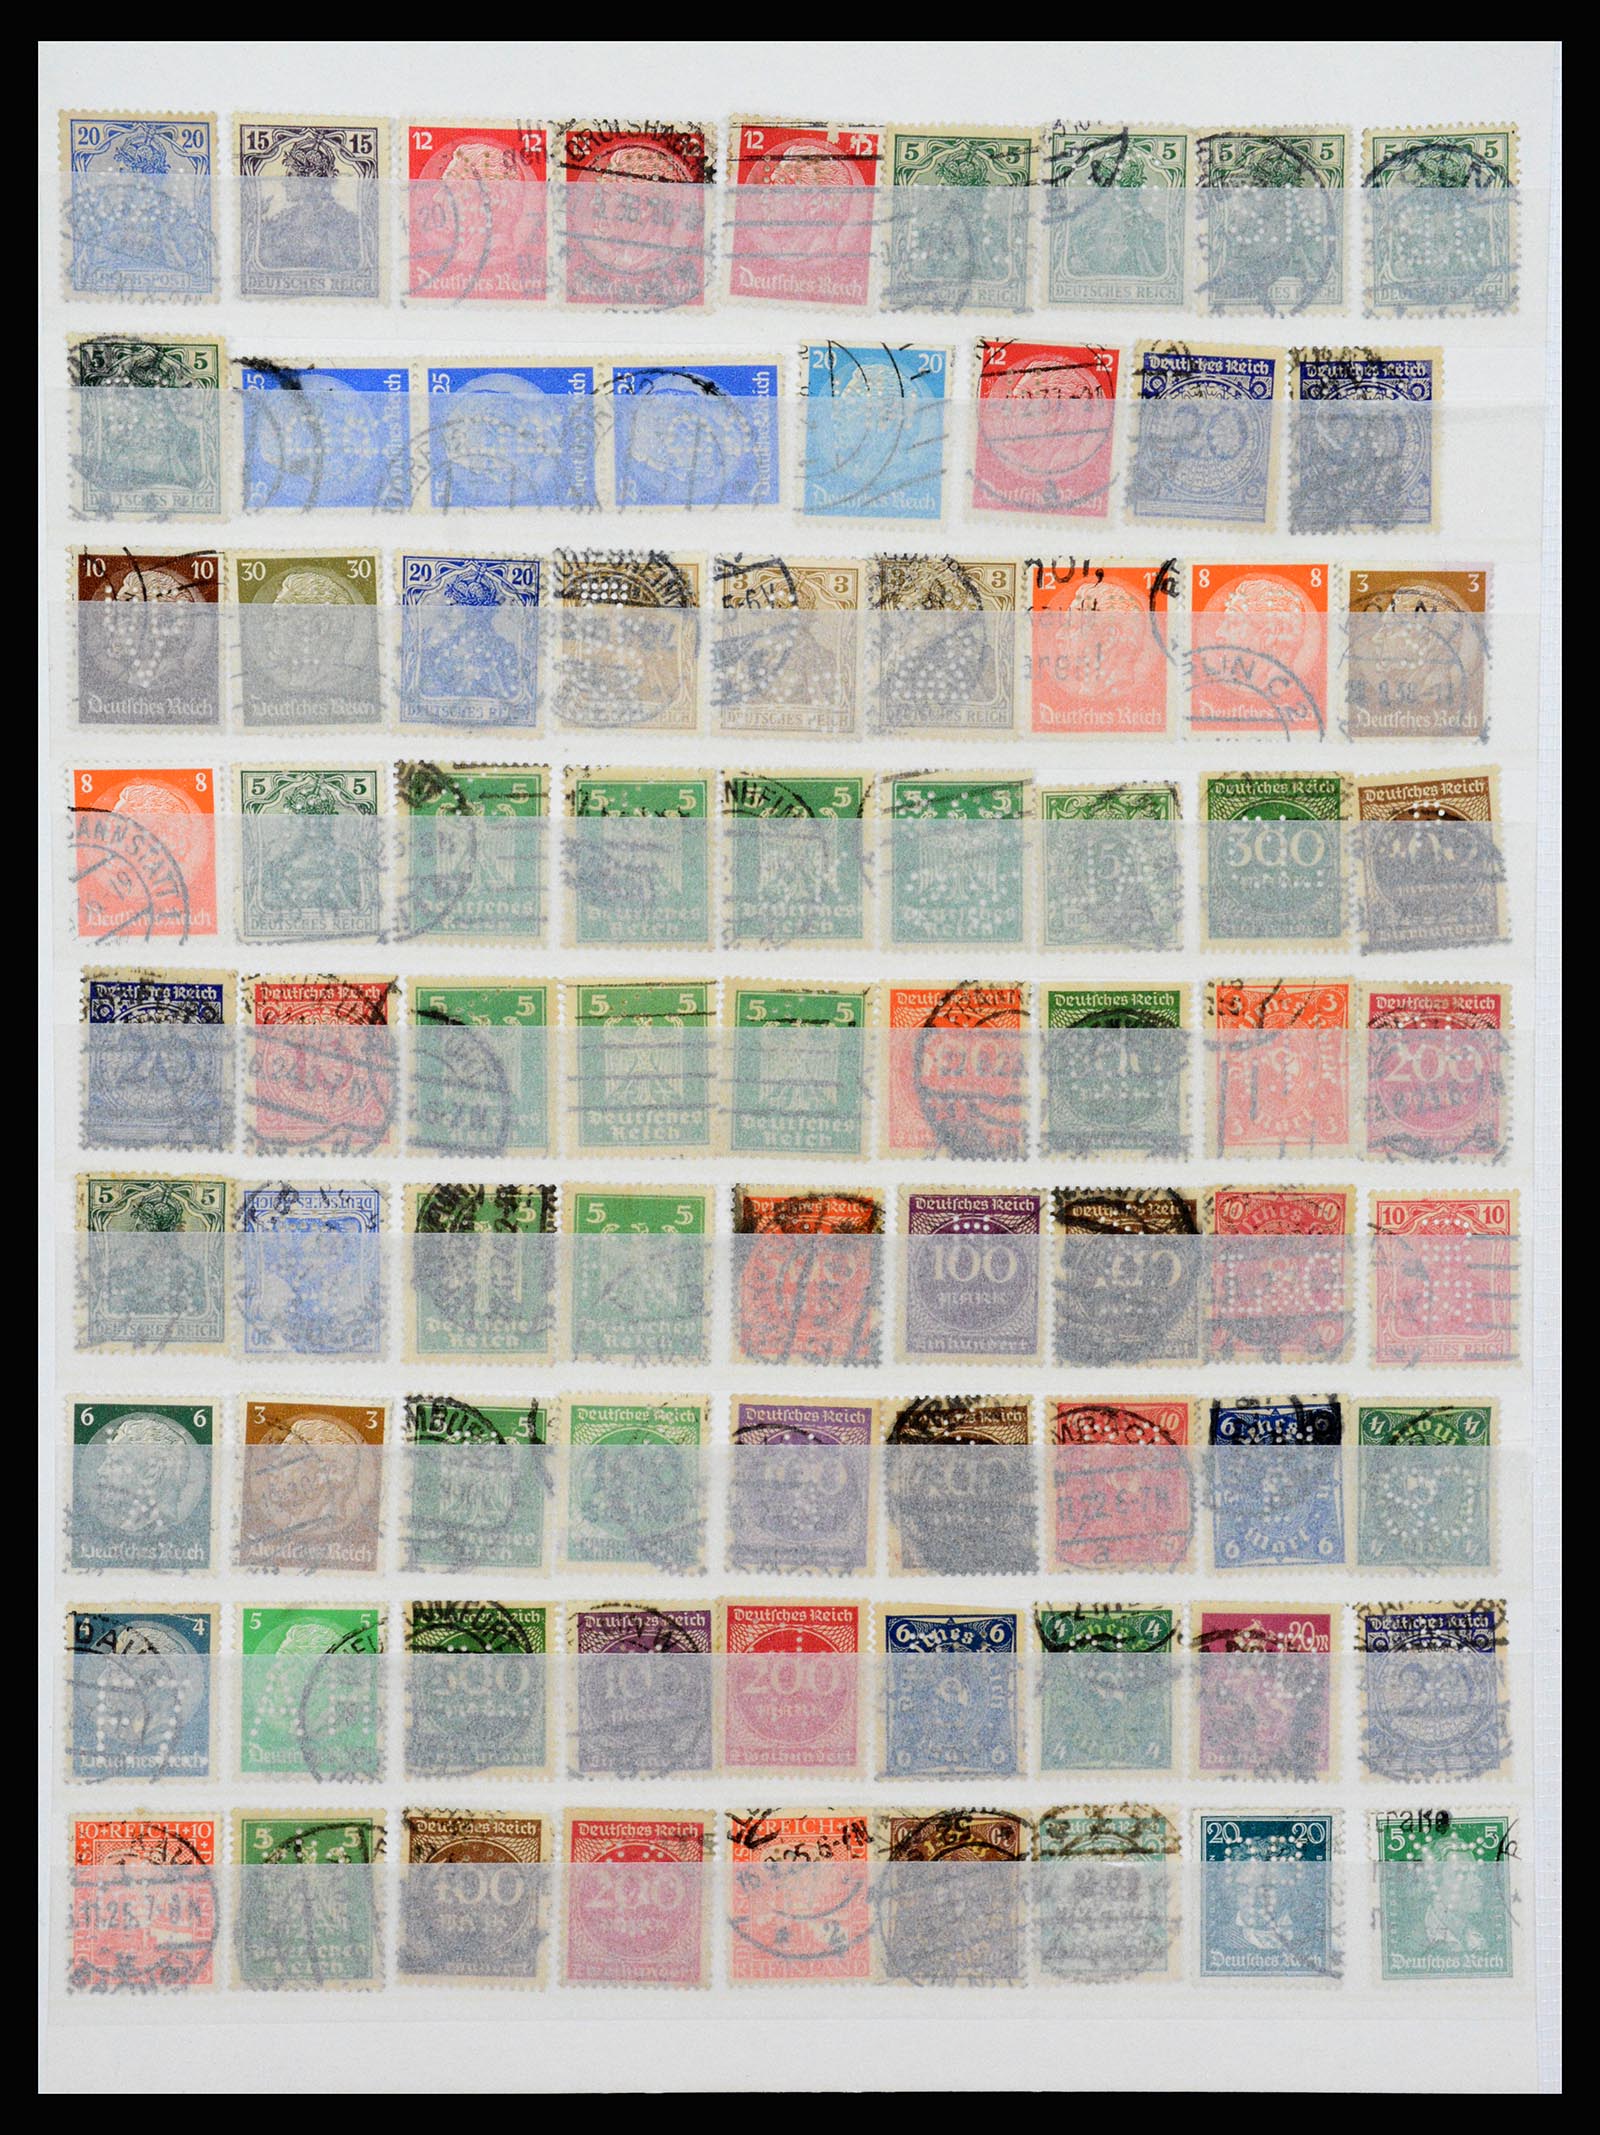 37254 006 - Postzegelverzameling 37254 Duitse Rijk perfins 1900-1945.